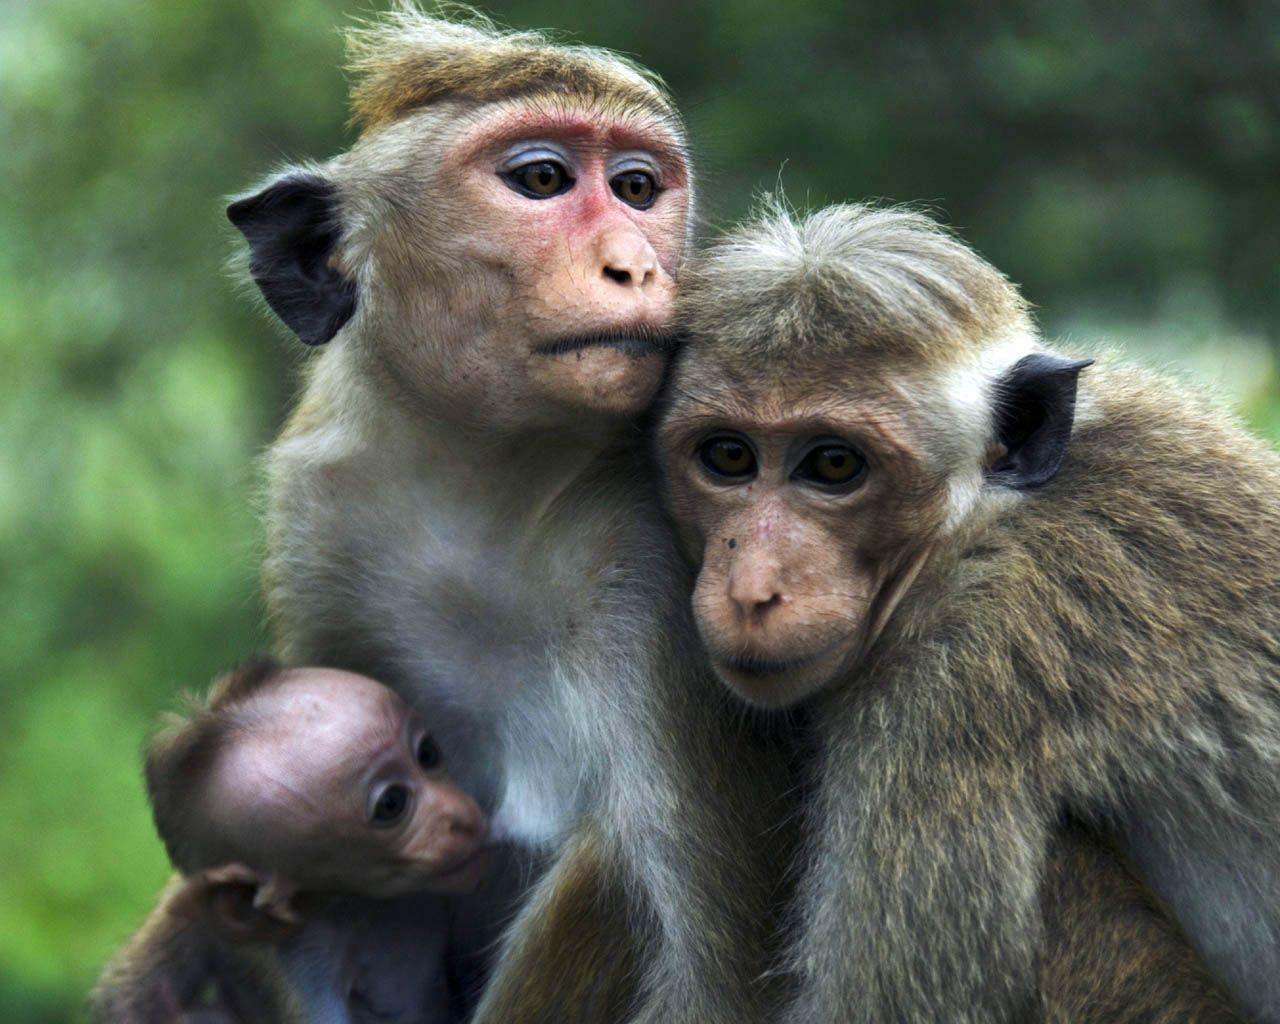 Desktop Nature wallpaper: Baby Monkey Wallpaper, Monkey Baby Funny